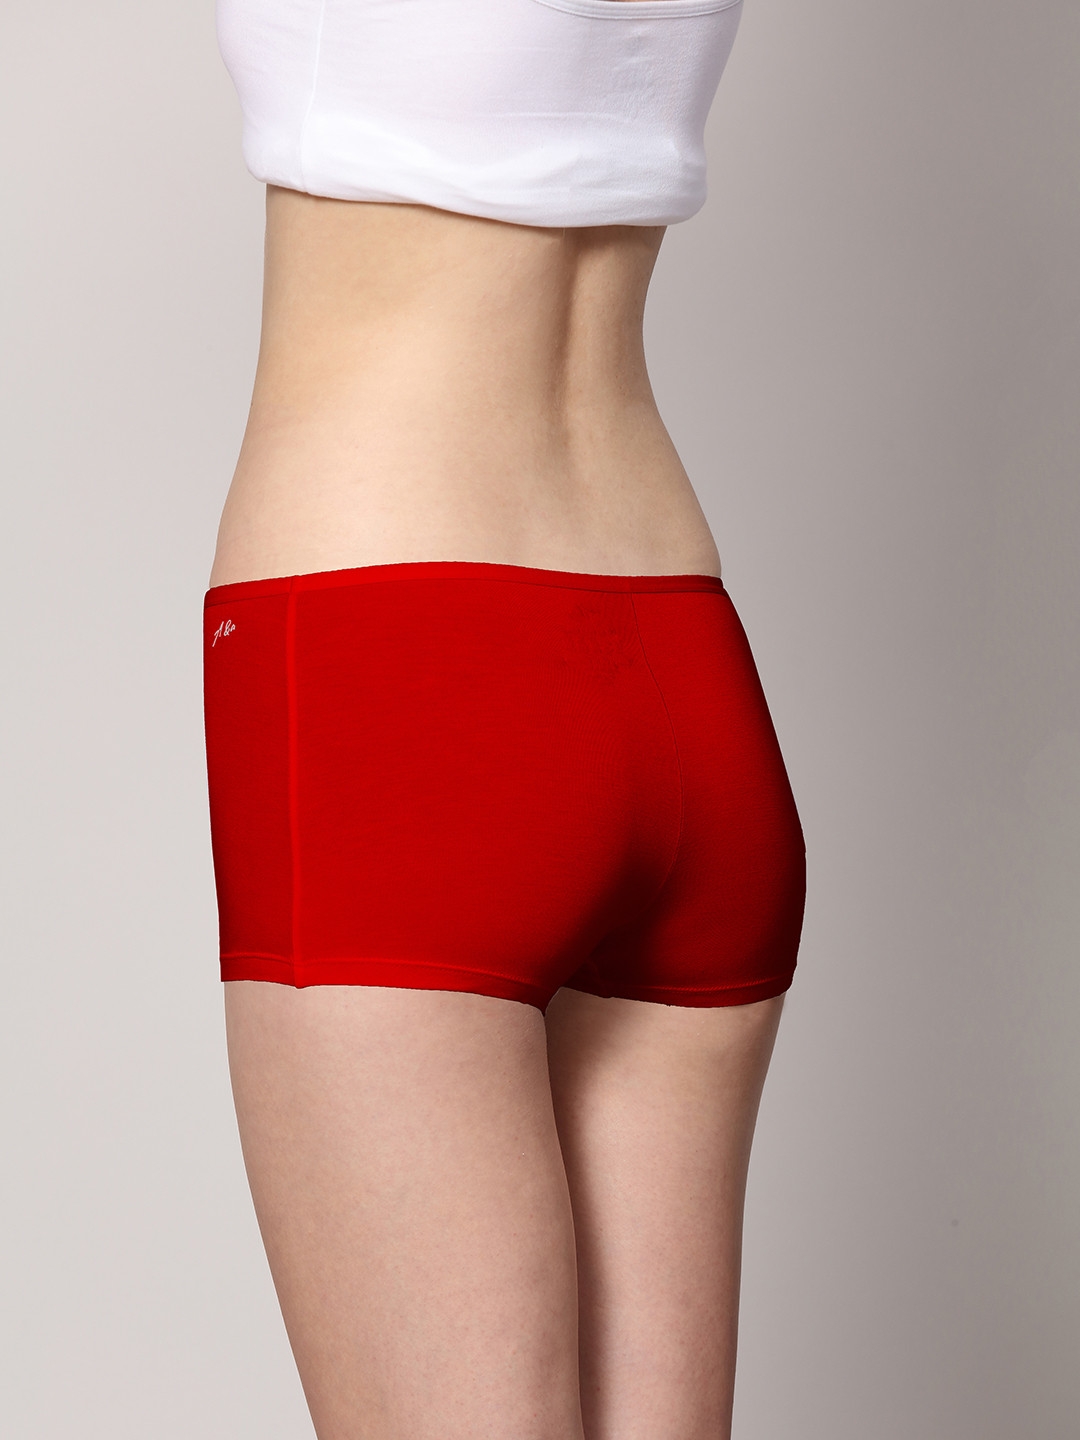 AshleyandAlvis | AshleyandAlvis Women's Panties Micro Modal, Anti Bacterial, Skinny Soft, Premium Boyshorts -No Itching, Sweat Proof, Double In-seam Gusset 3